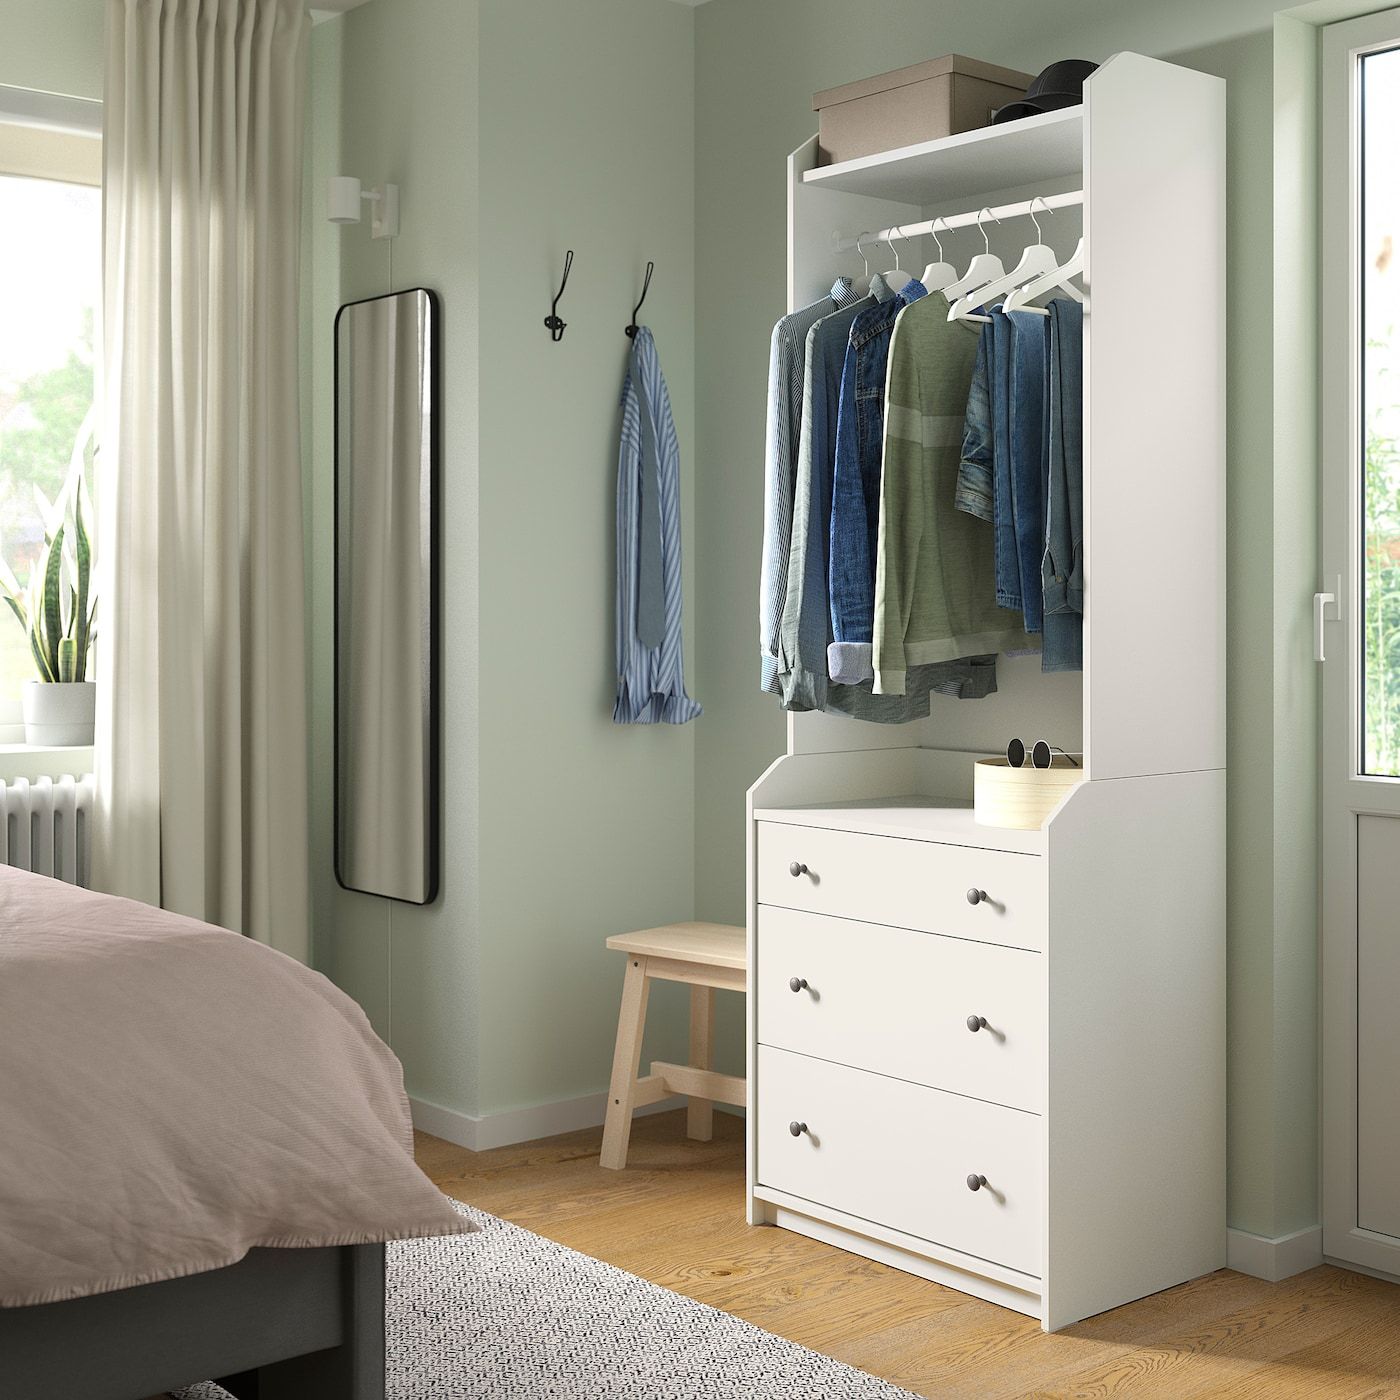 Hauga Open Wardrobe With 3 Drawers, White, 271/2x783/8" – Ikea With Regard To White Wood Wardrobes With Drawers (View 9 of 15)